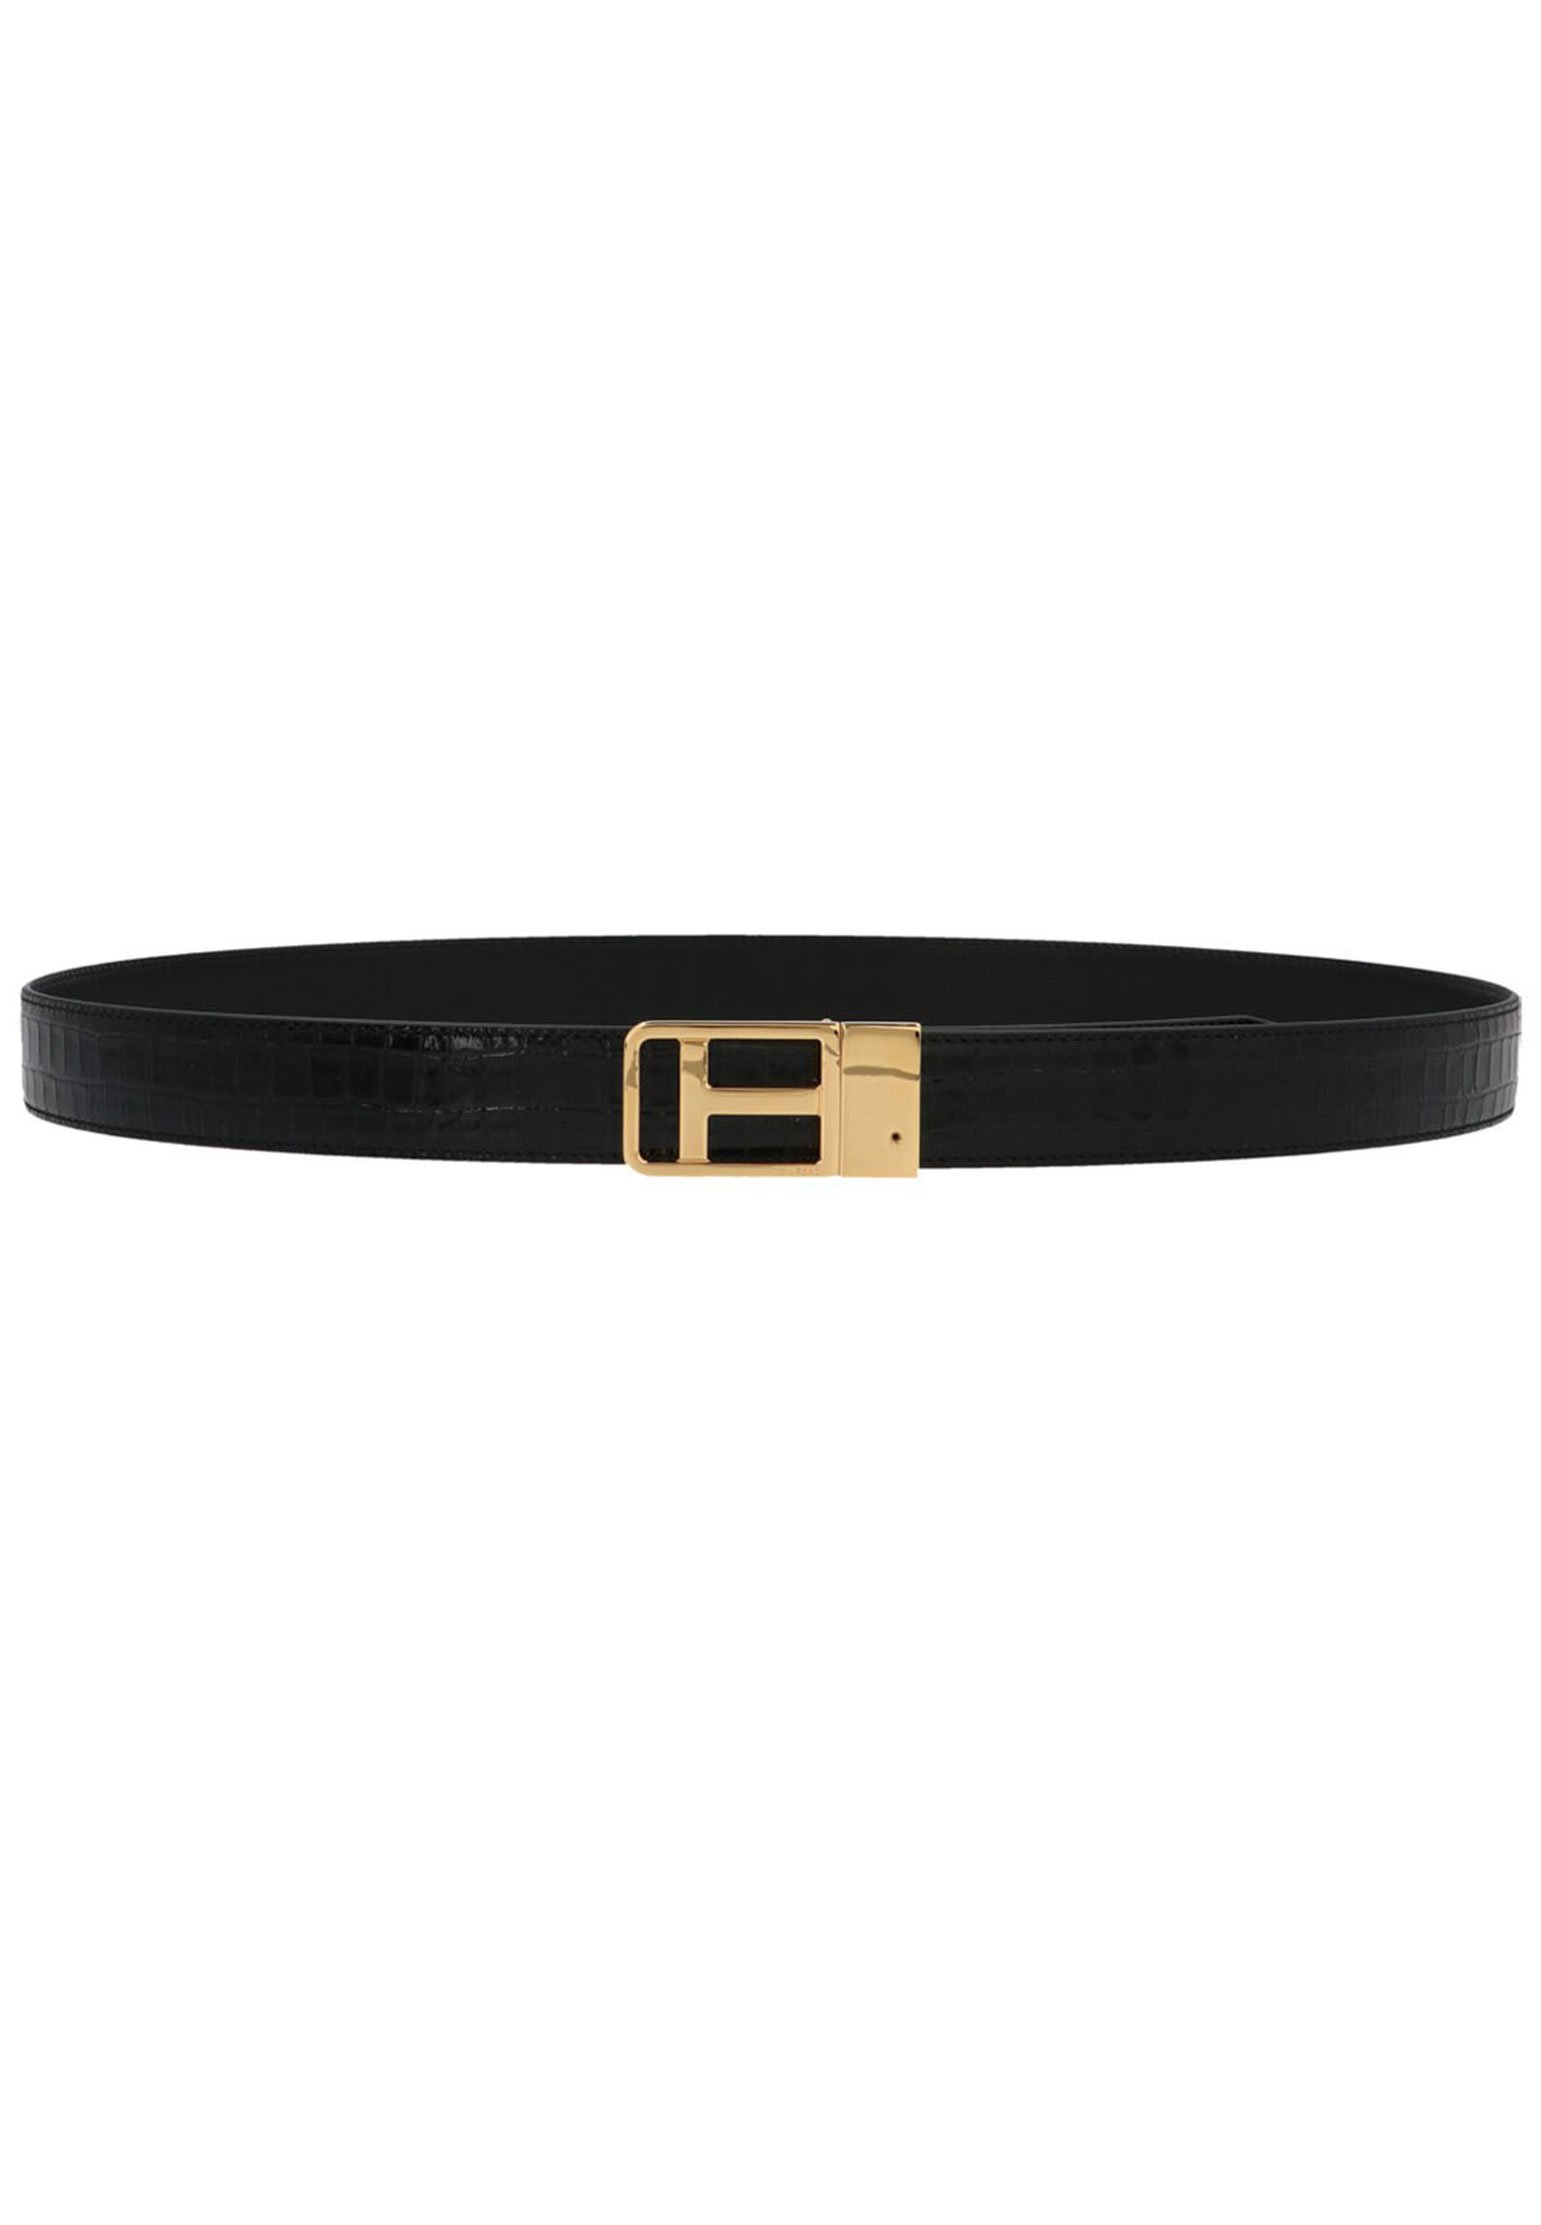 Leather belt TOM FORD Color: black (Code: 375) in online store Allure